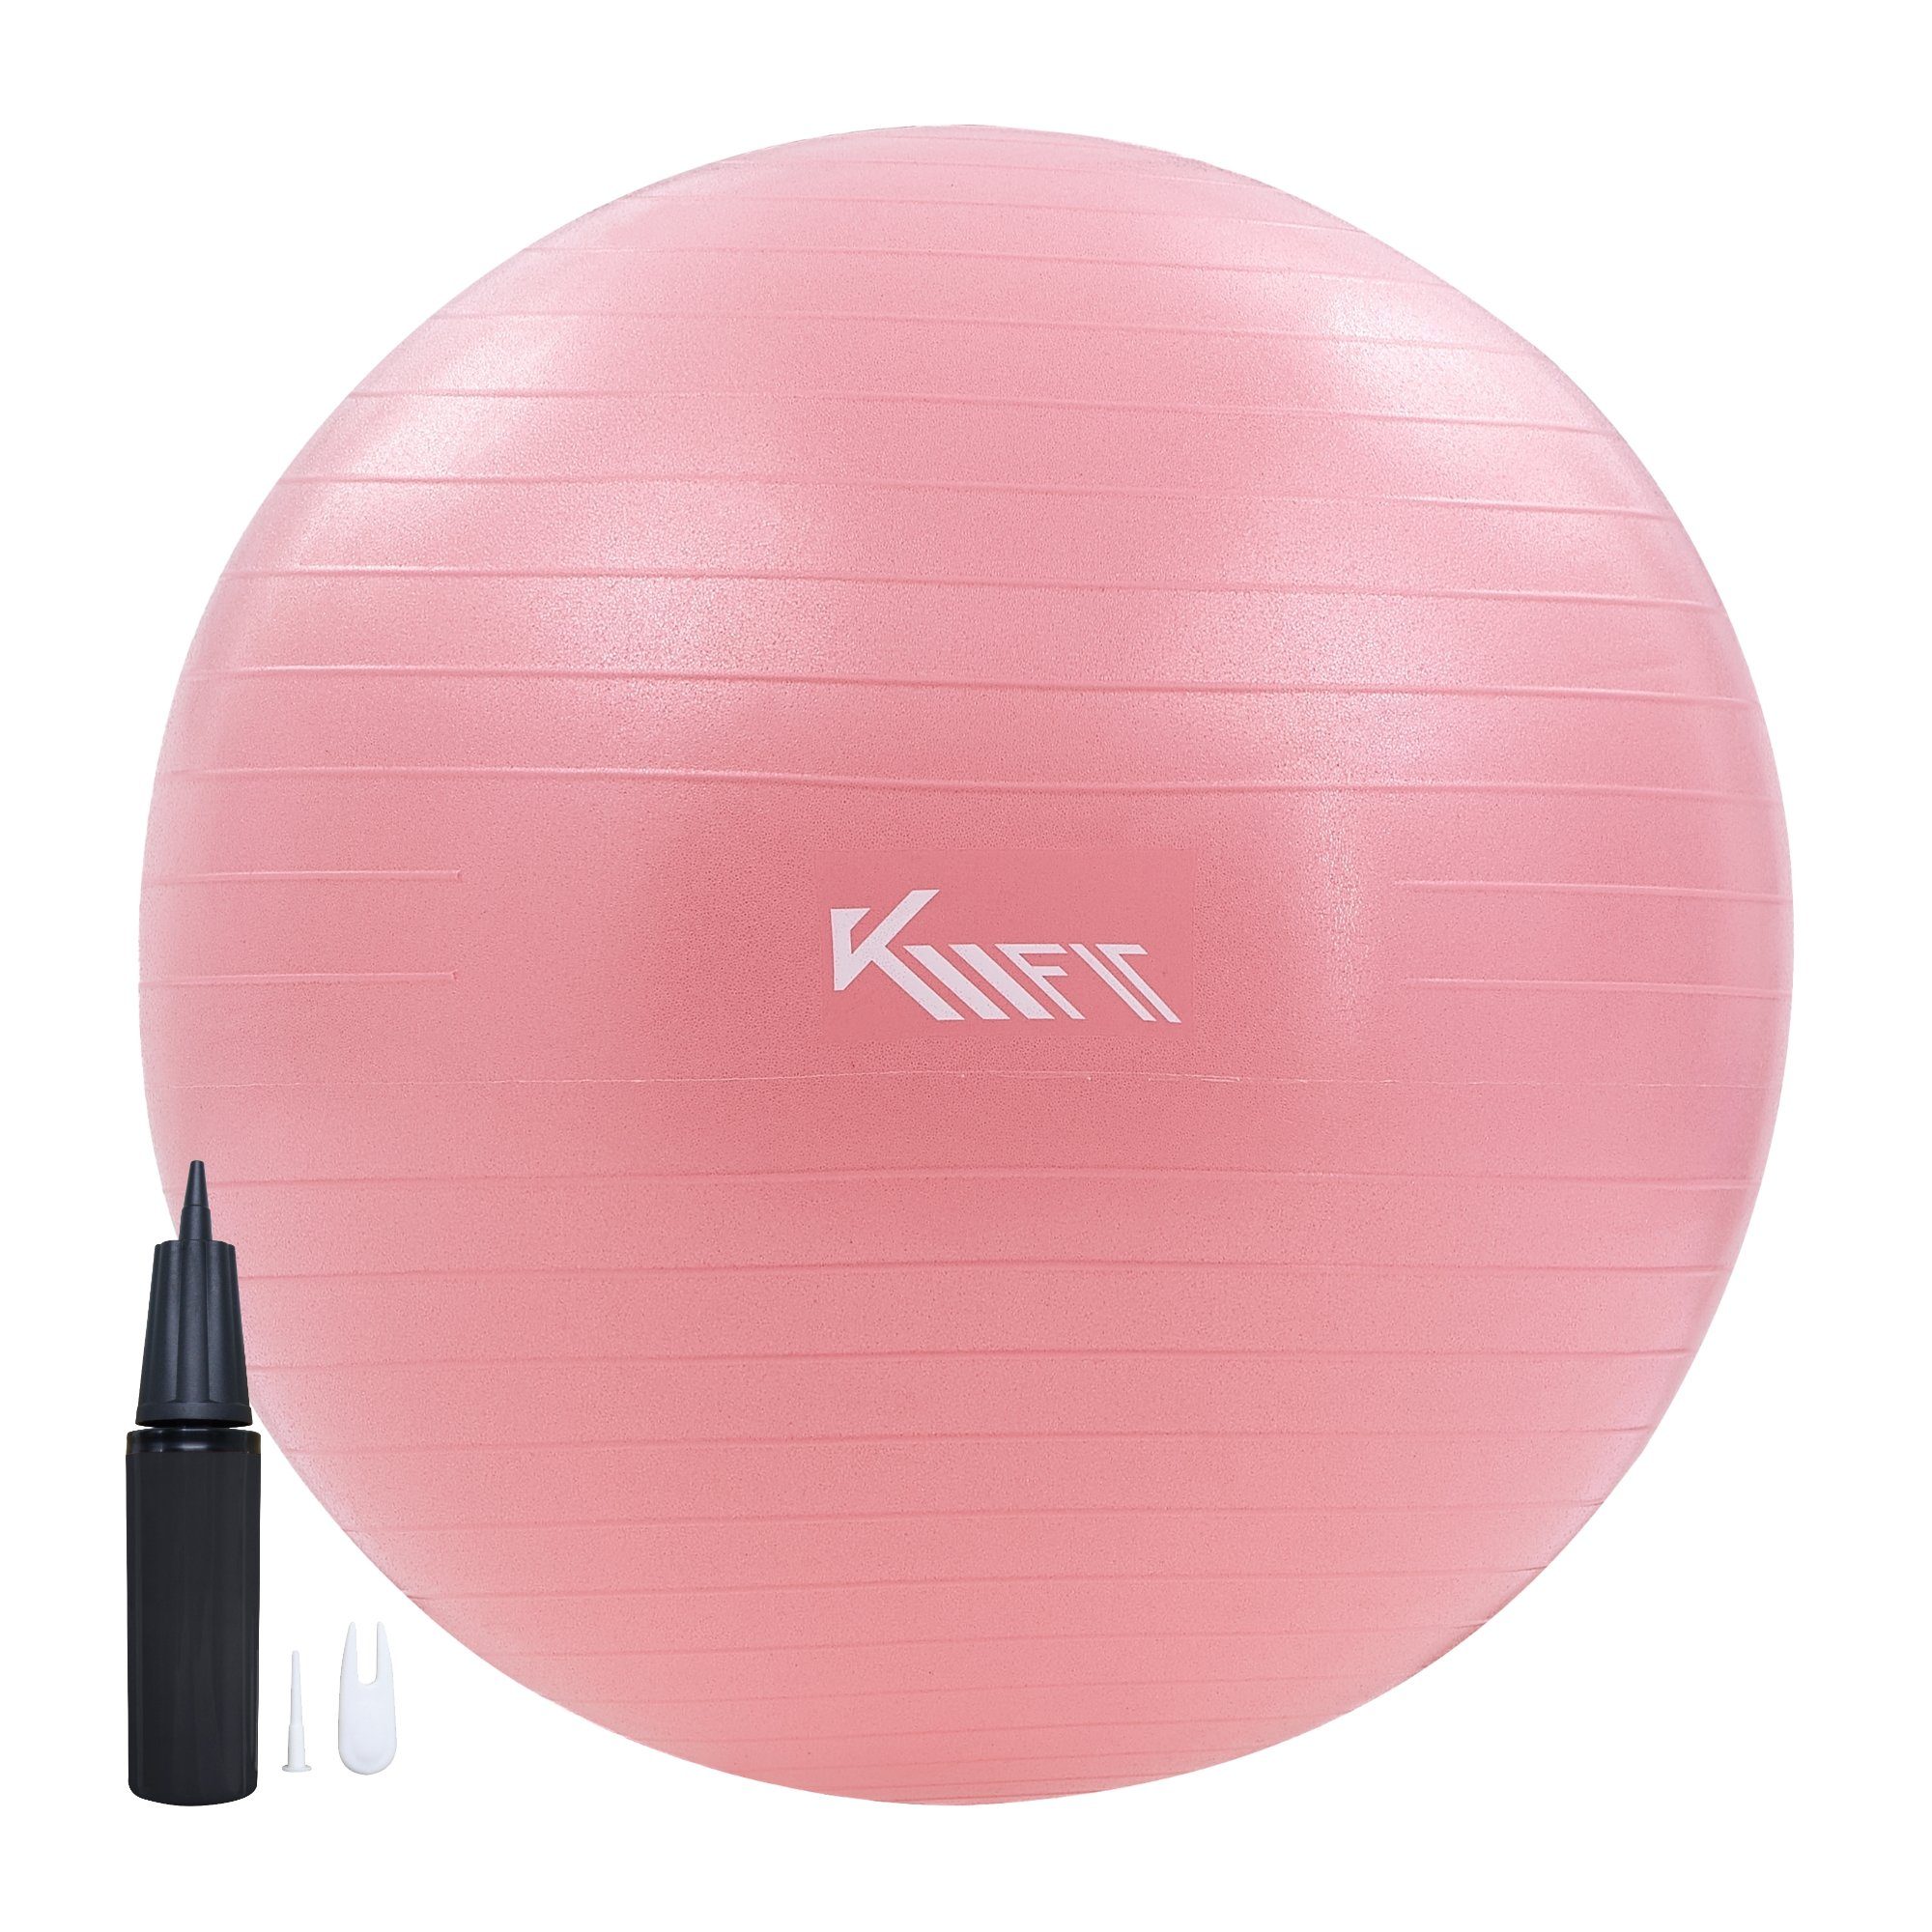 KM - Fit Gymnastikball Trainingsball Sitzball für Fitness,Yoga,Gymnastik 65 cm (mit Luft-Pumpe, Rosa), Max. Belastbarkeit: 300 kg